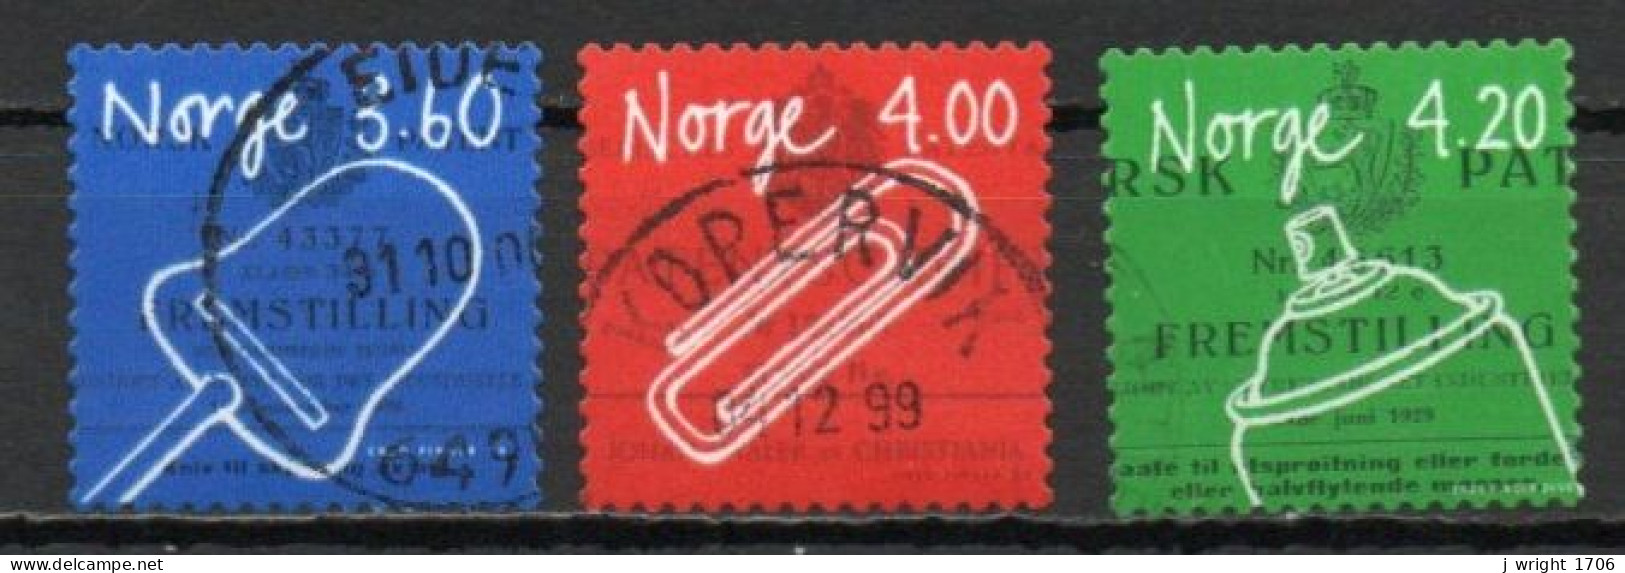 Norway, 1999-2000, Norwegian Inventions, Set, USED - Usati